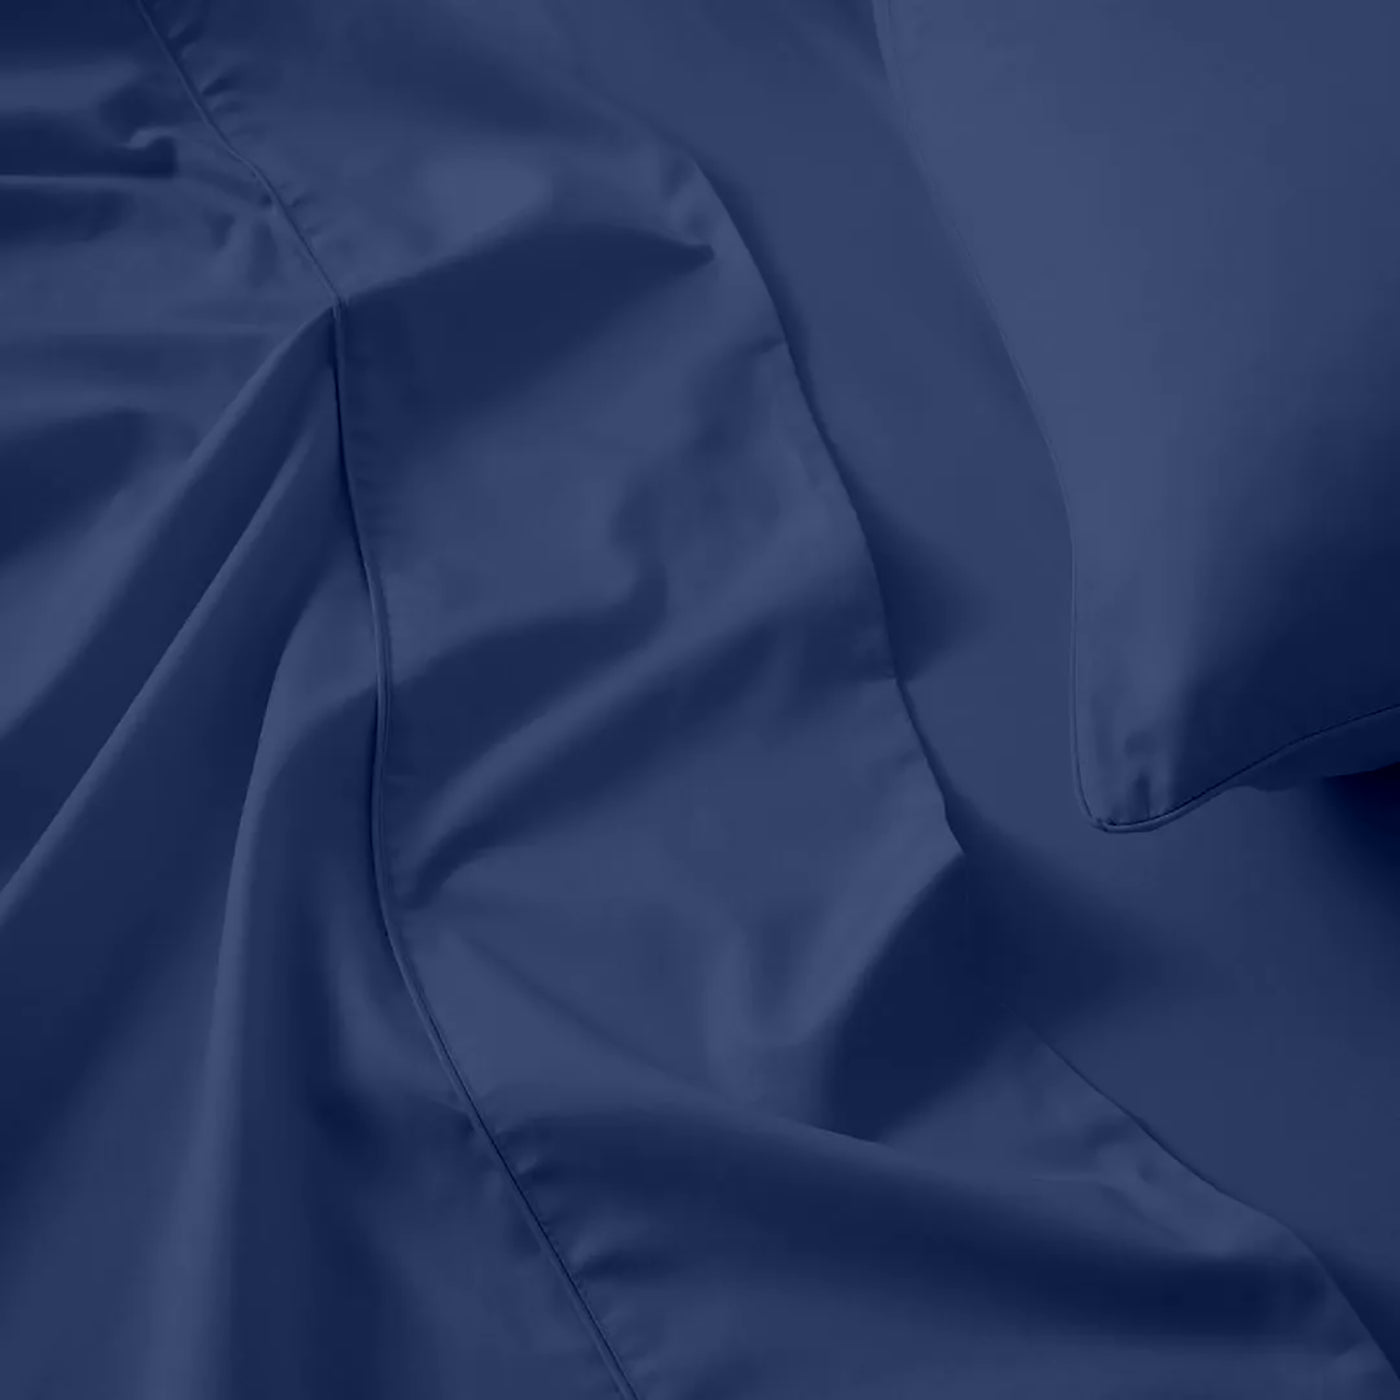 300 TC Egyptian Cotton 3 Piece Solid Flat Bed Sheet - Medium Blue